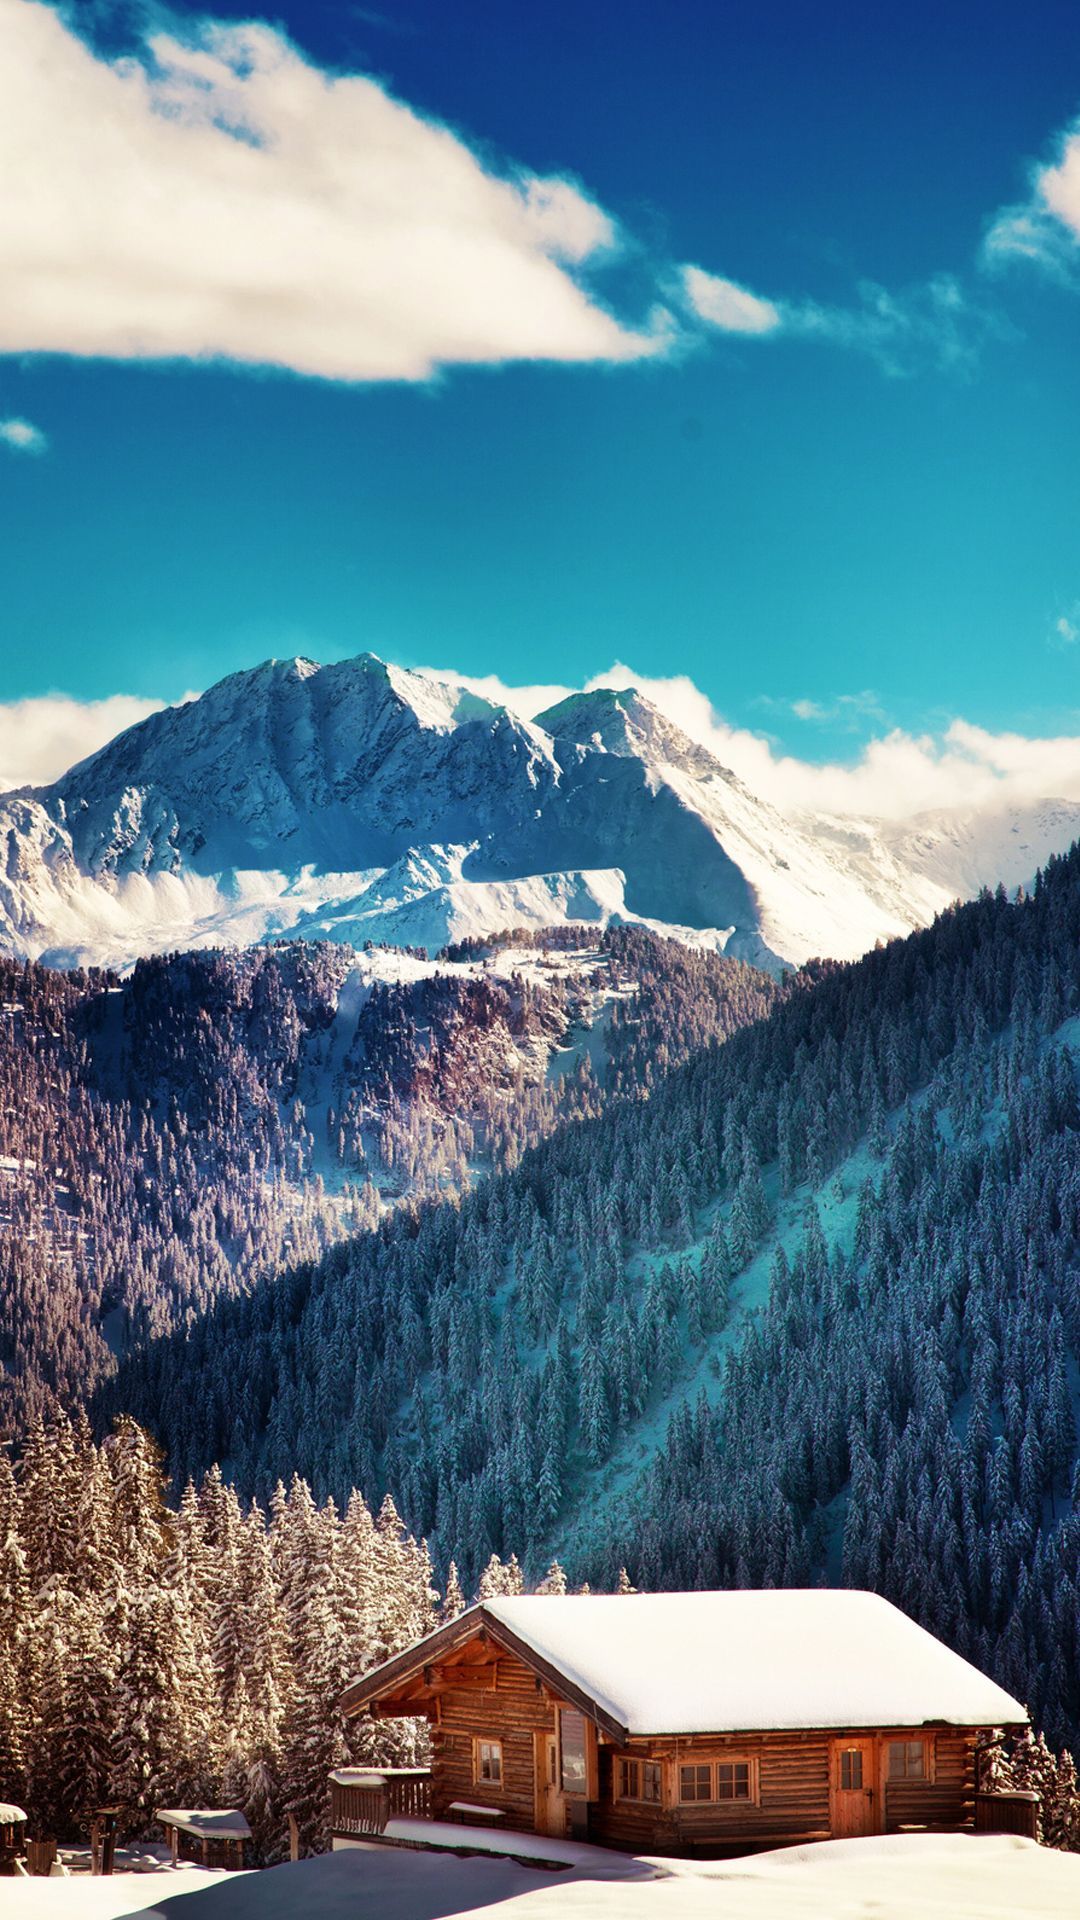 Mountains Chalet Winter Landscape IPhone 6 Plus HD Wallpaper. Best Nature Wallpaper, Beautiful Nature Wallpaper, IPhone Wallpaper Winter